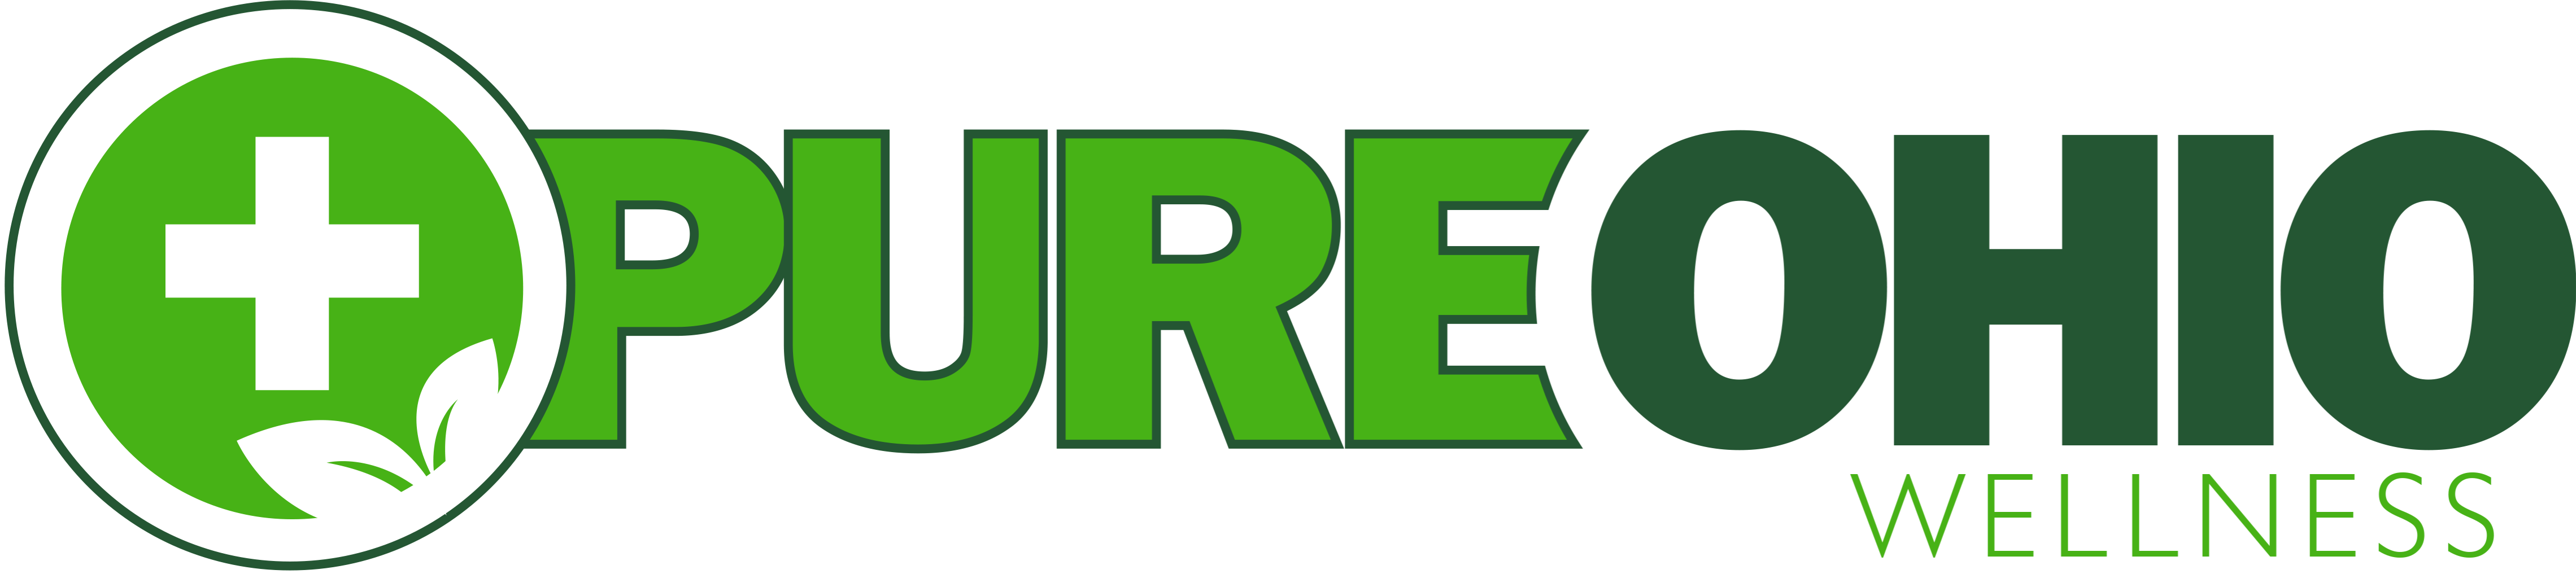 Pure Ohio Wellness Cannabis Brand Logo